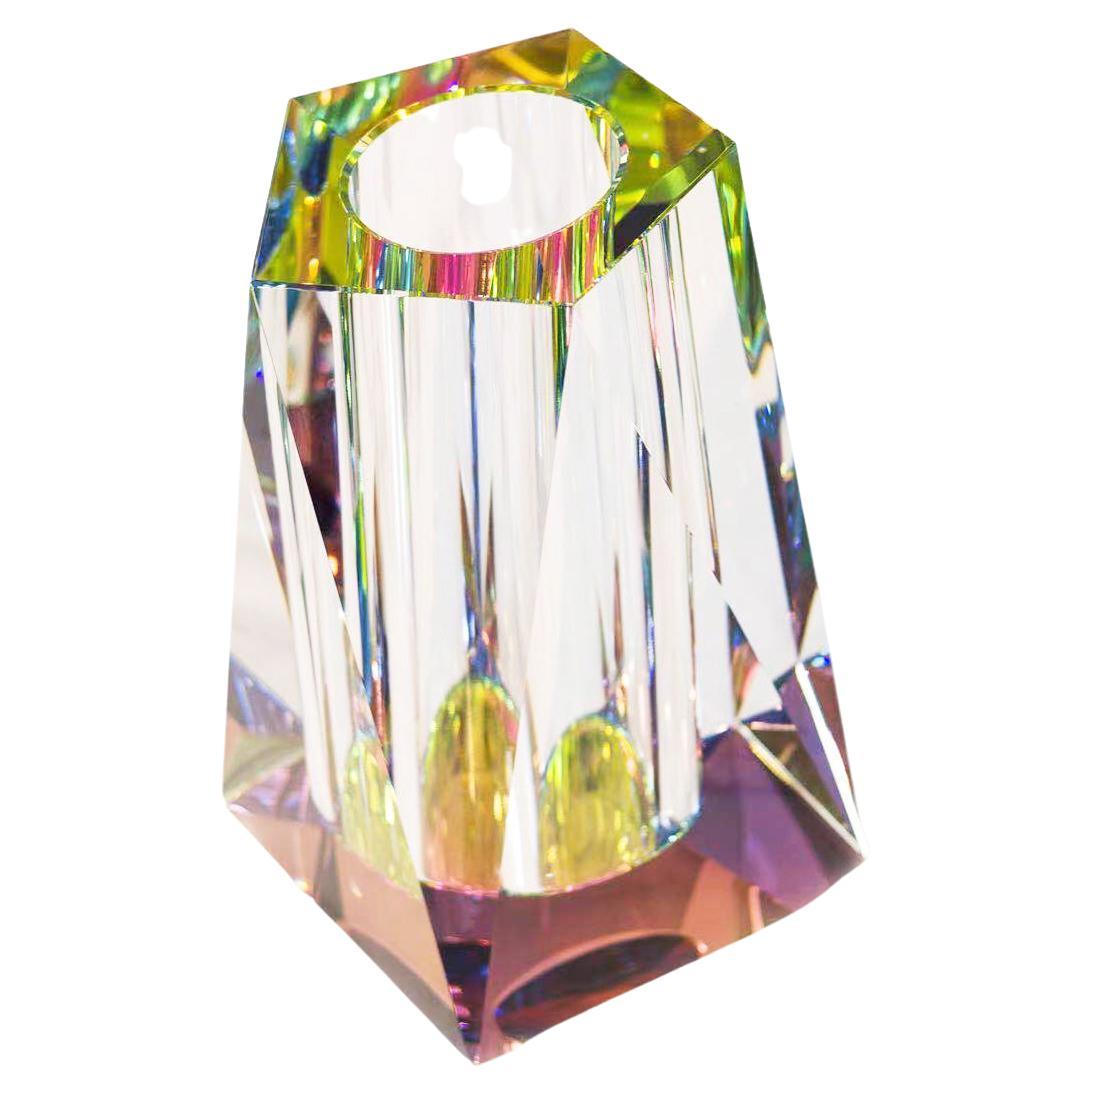 REGENBOGEN : Grand vase contemporain en cristal au plomb